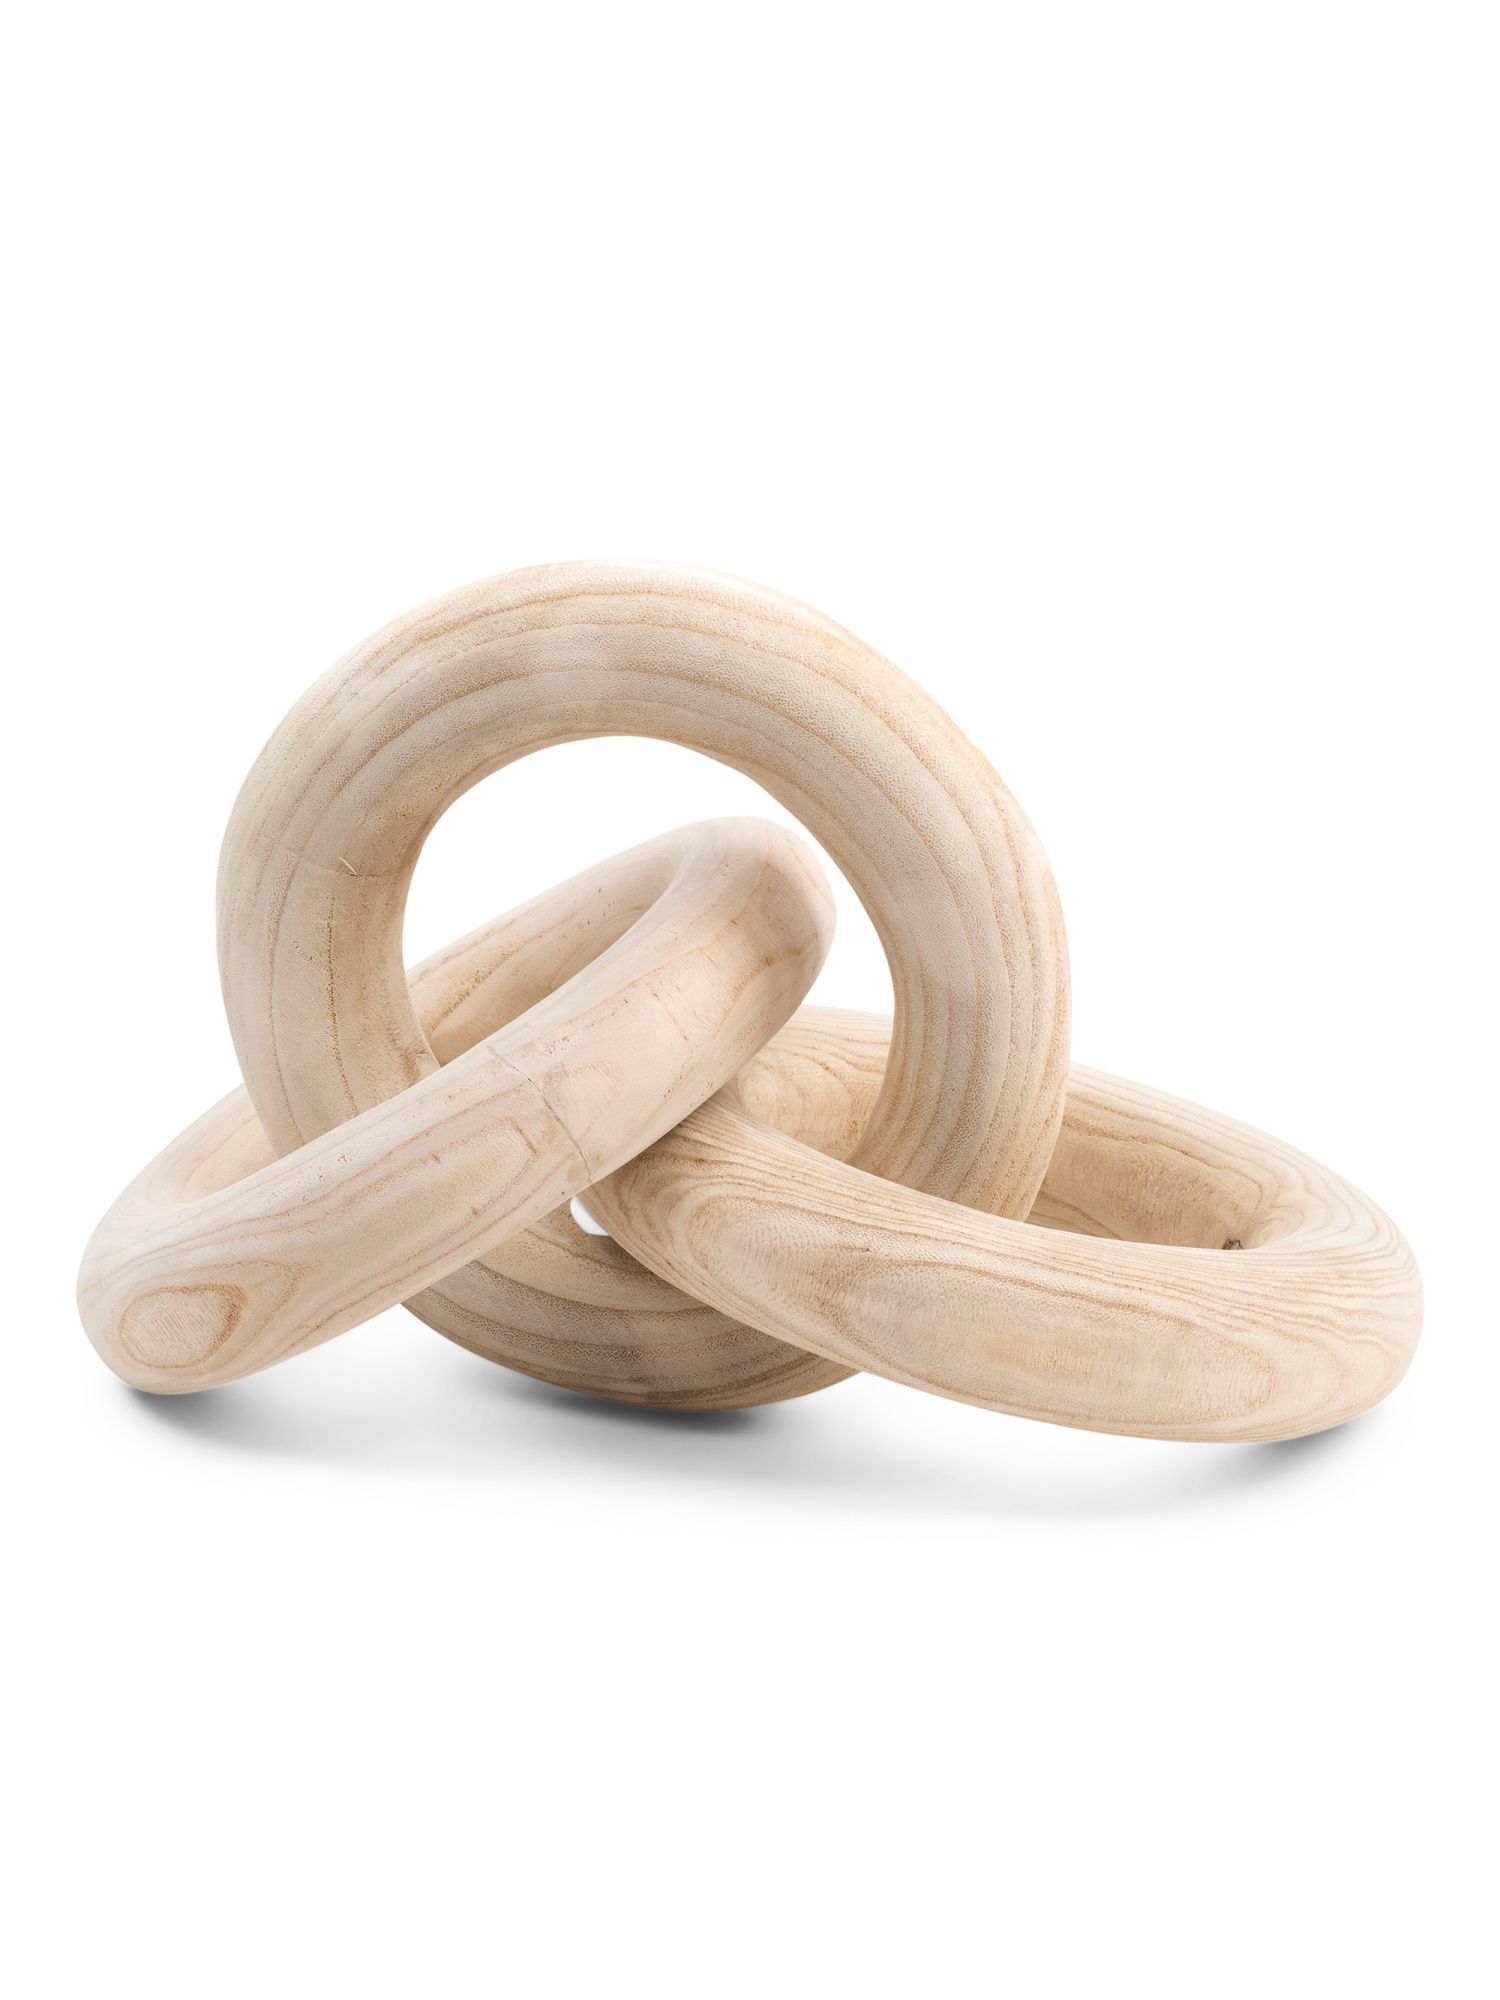 Wooden Rings Decor | Home | T.J.Maxx | TJ Maxx